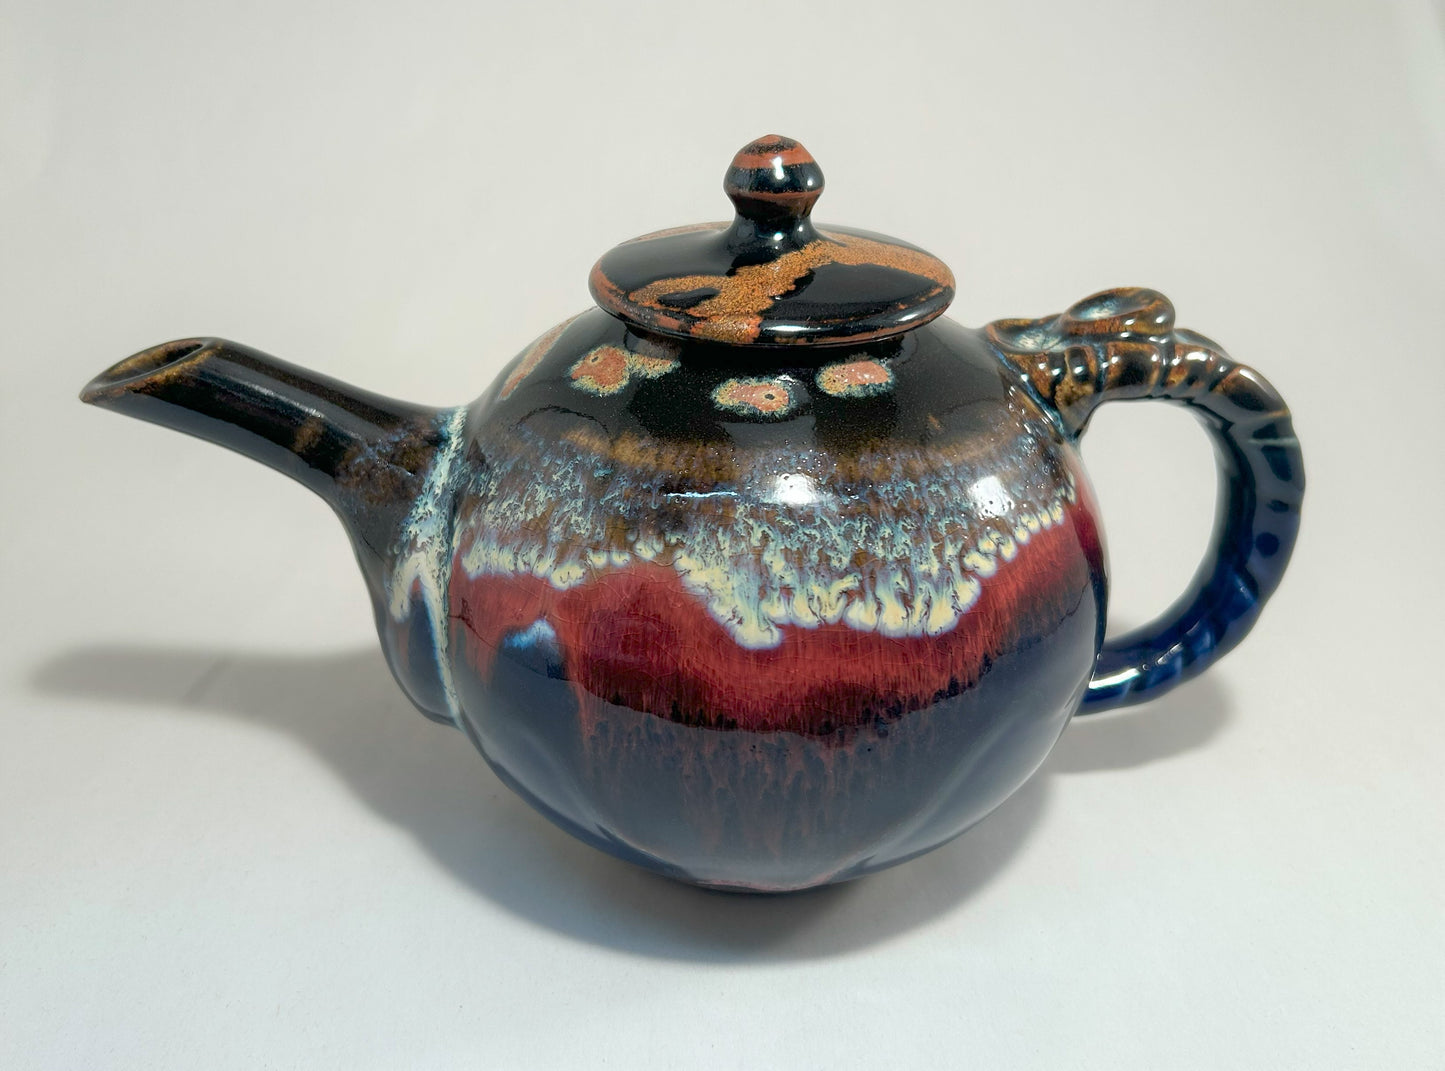 Handmade pottery teapot